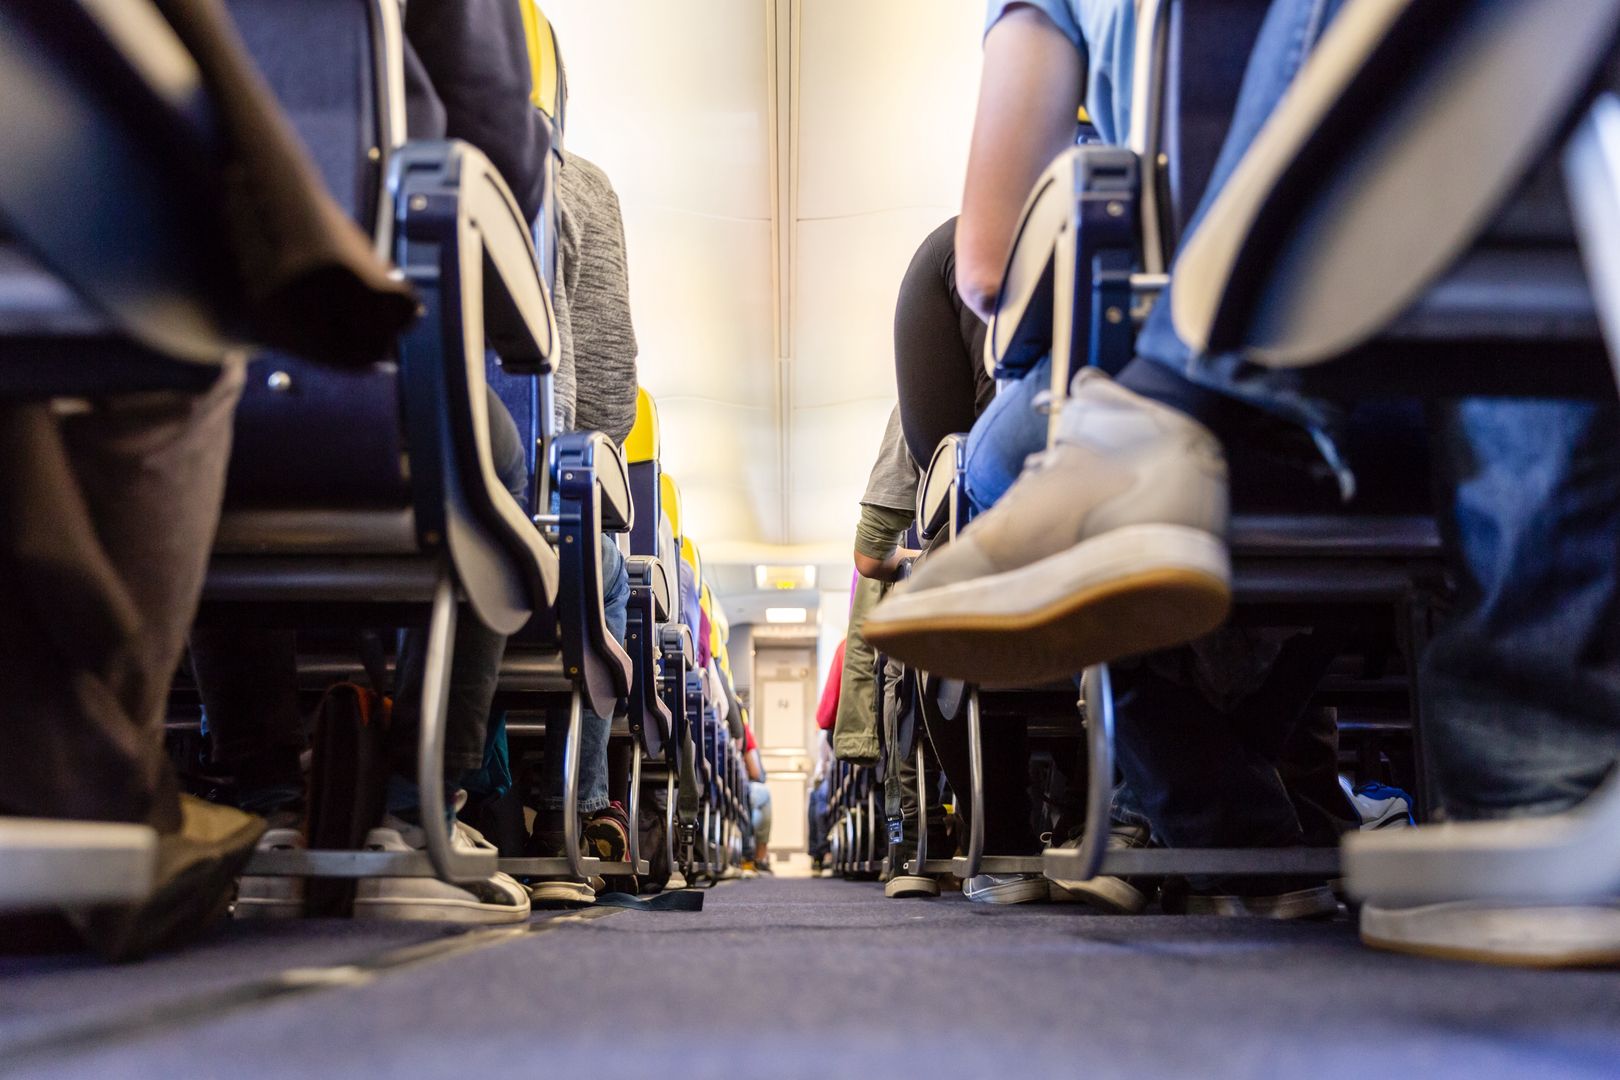 Flight attendants advise against wearing high heels and dark socks